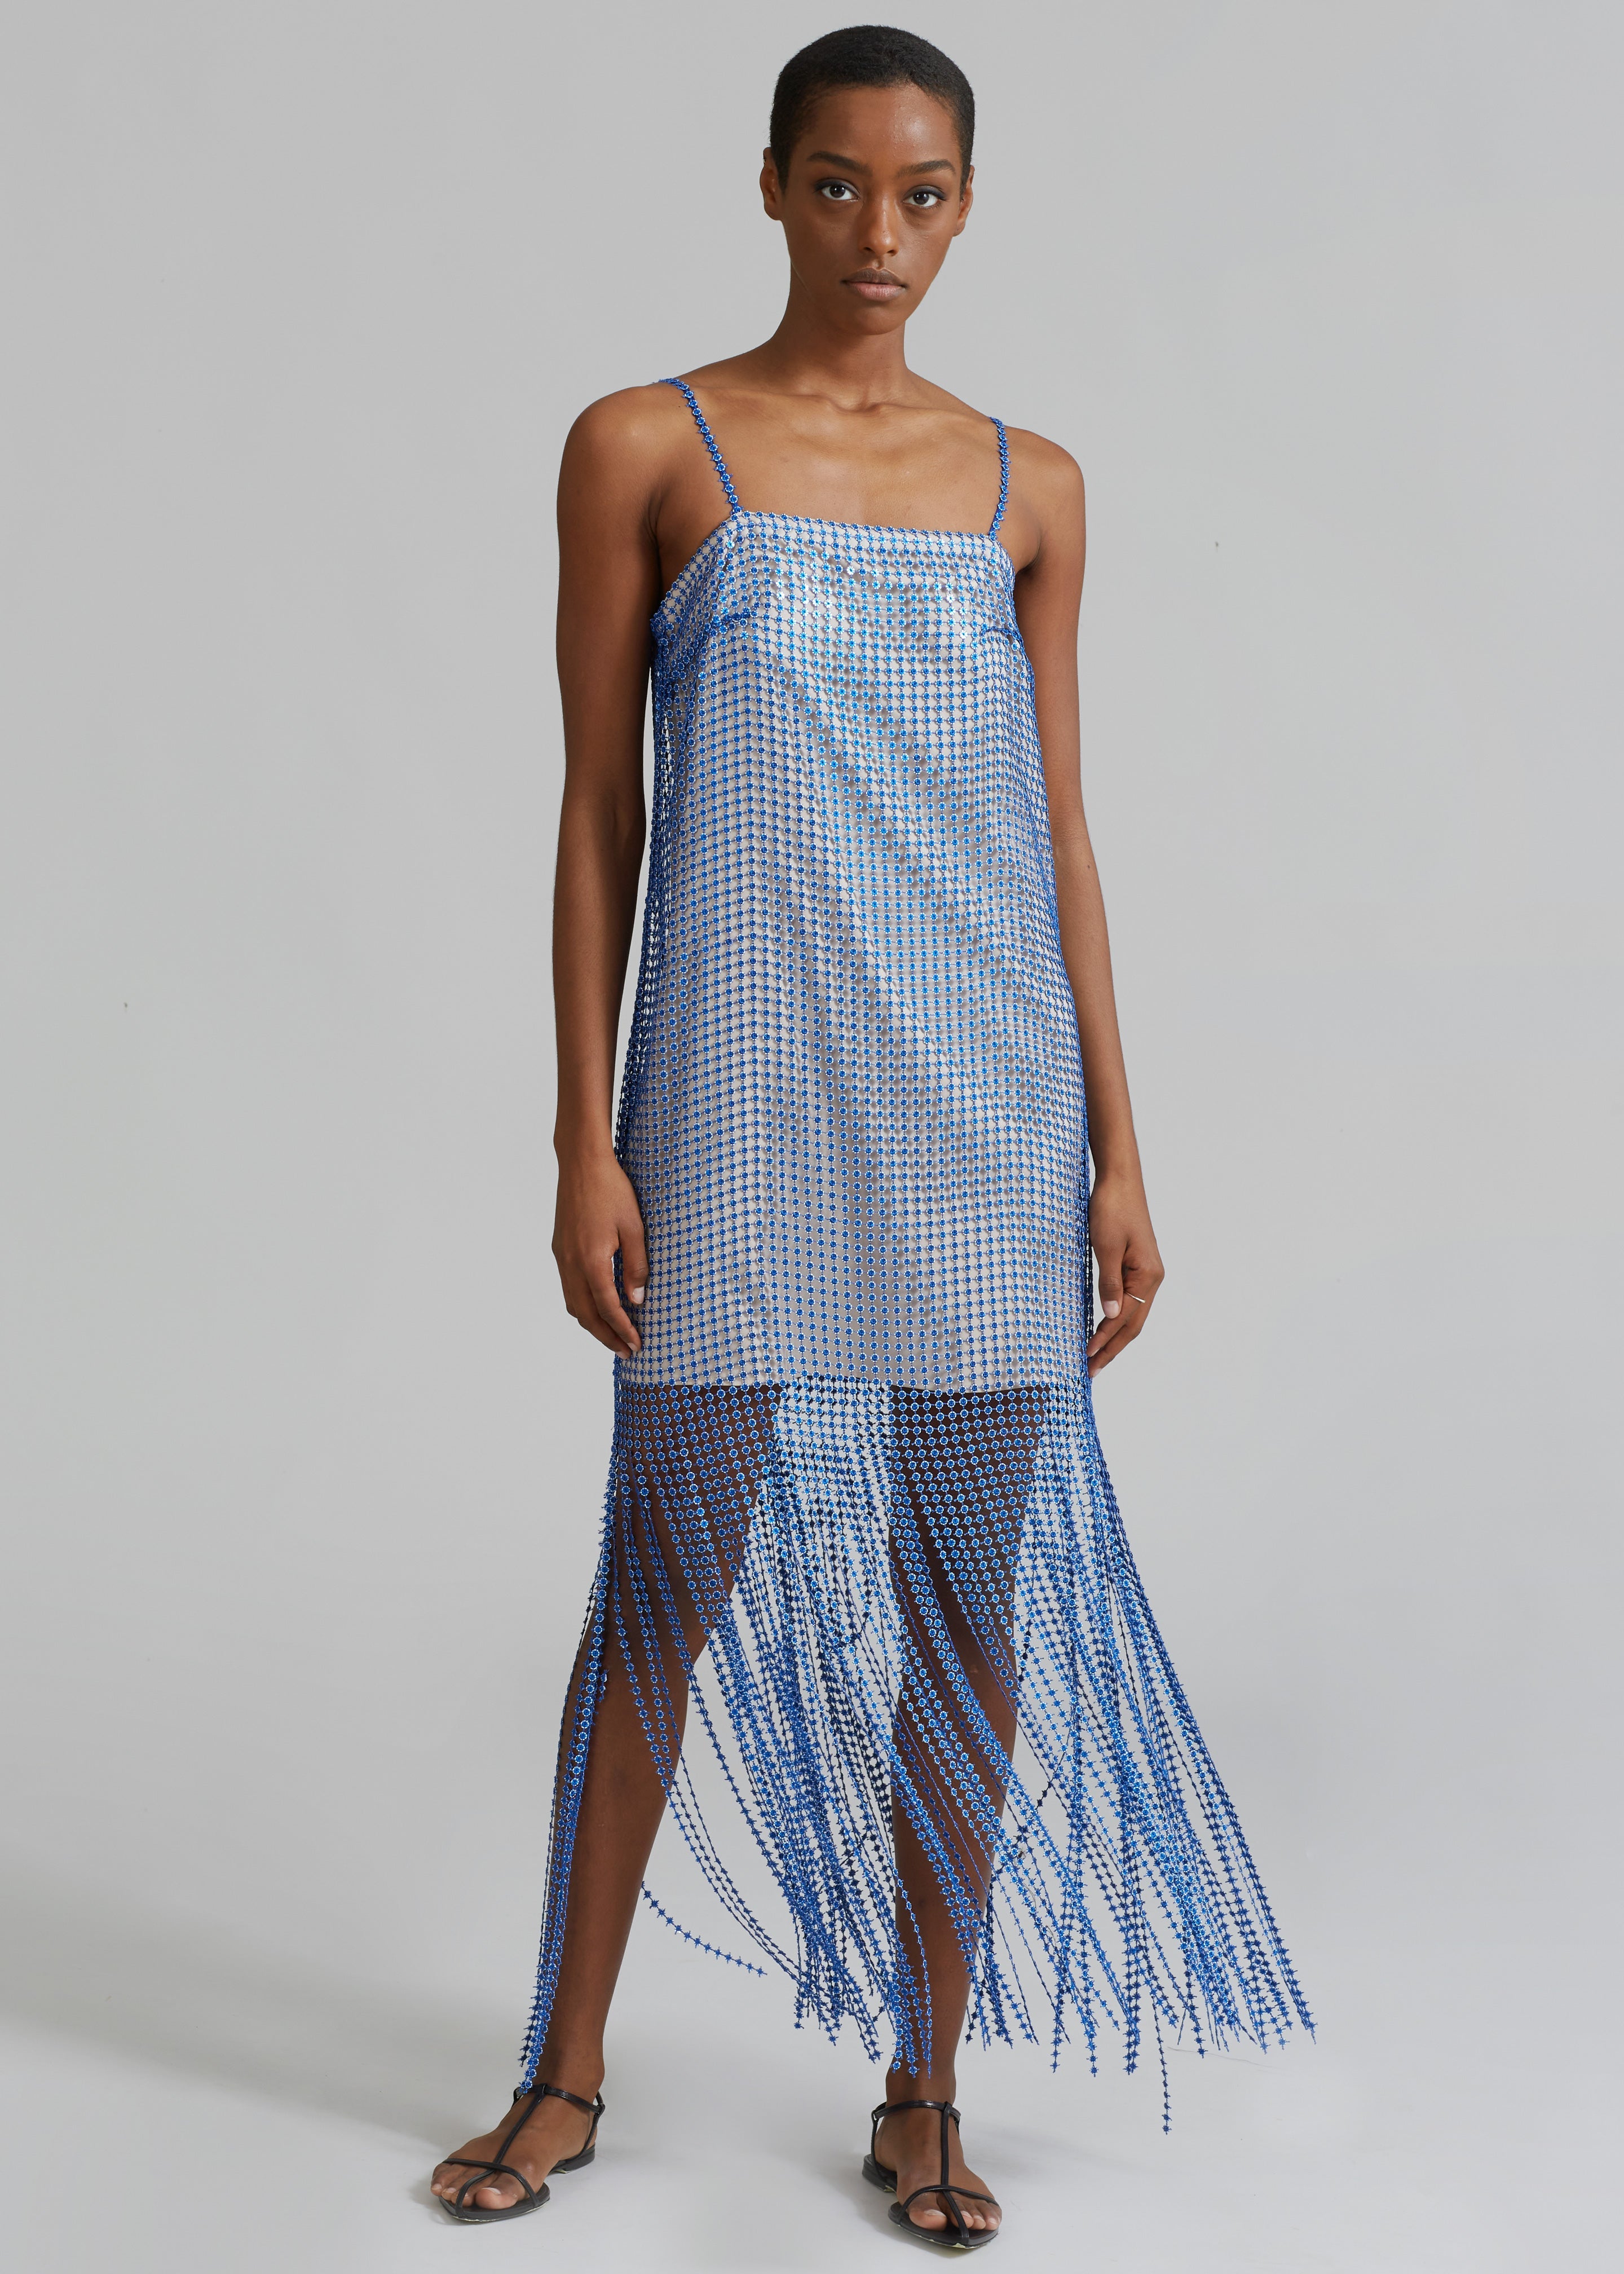 REMAIN Sequin Lace Fringe Dress - Surf The Web Comb. - 6